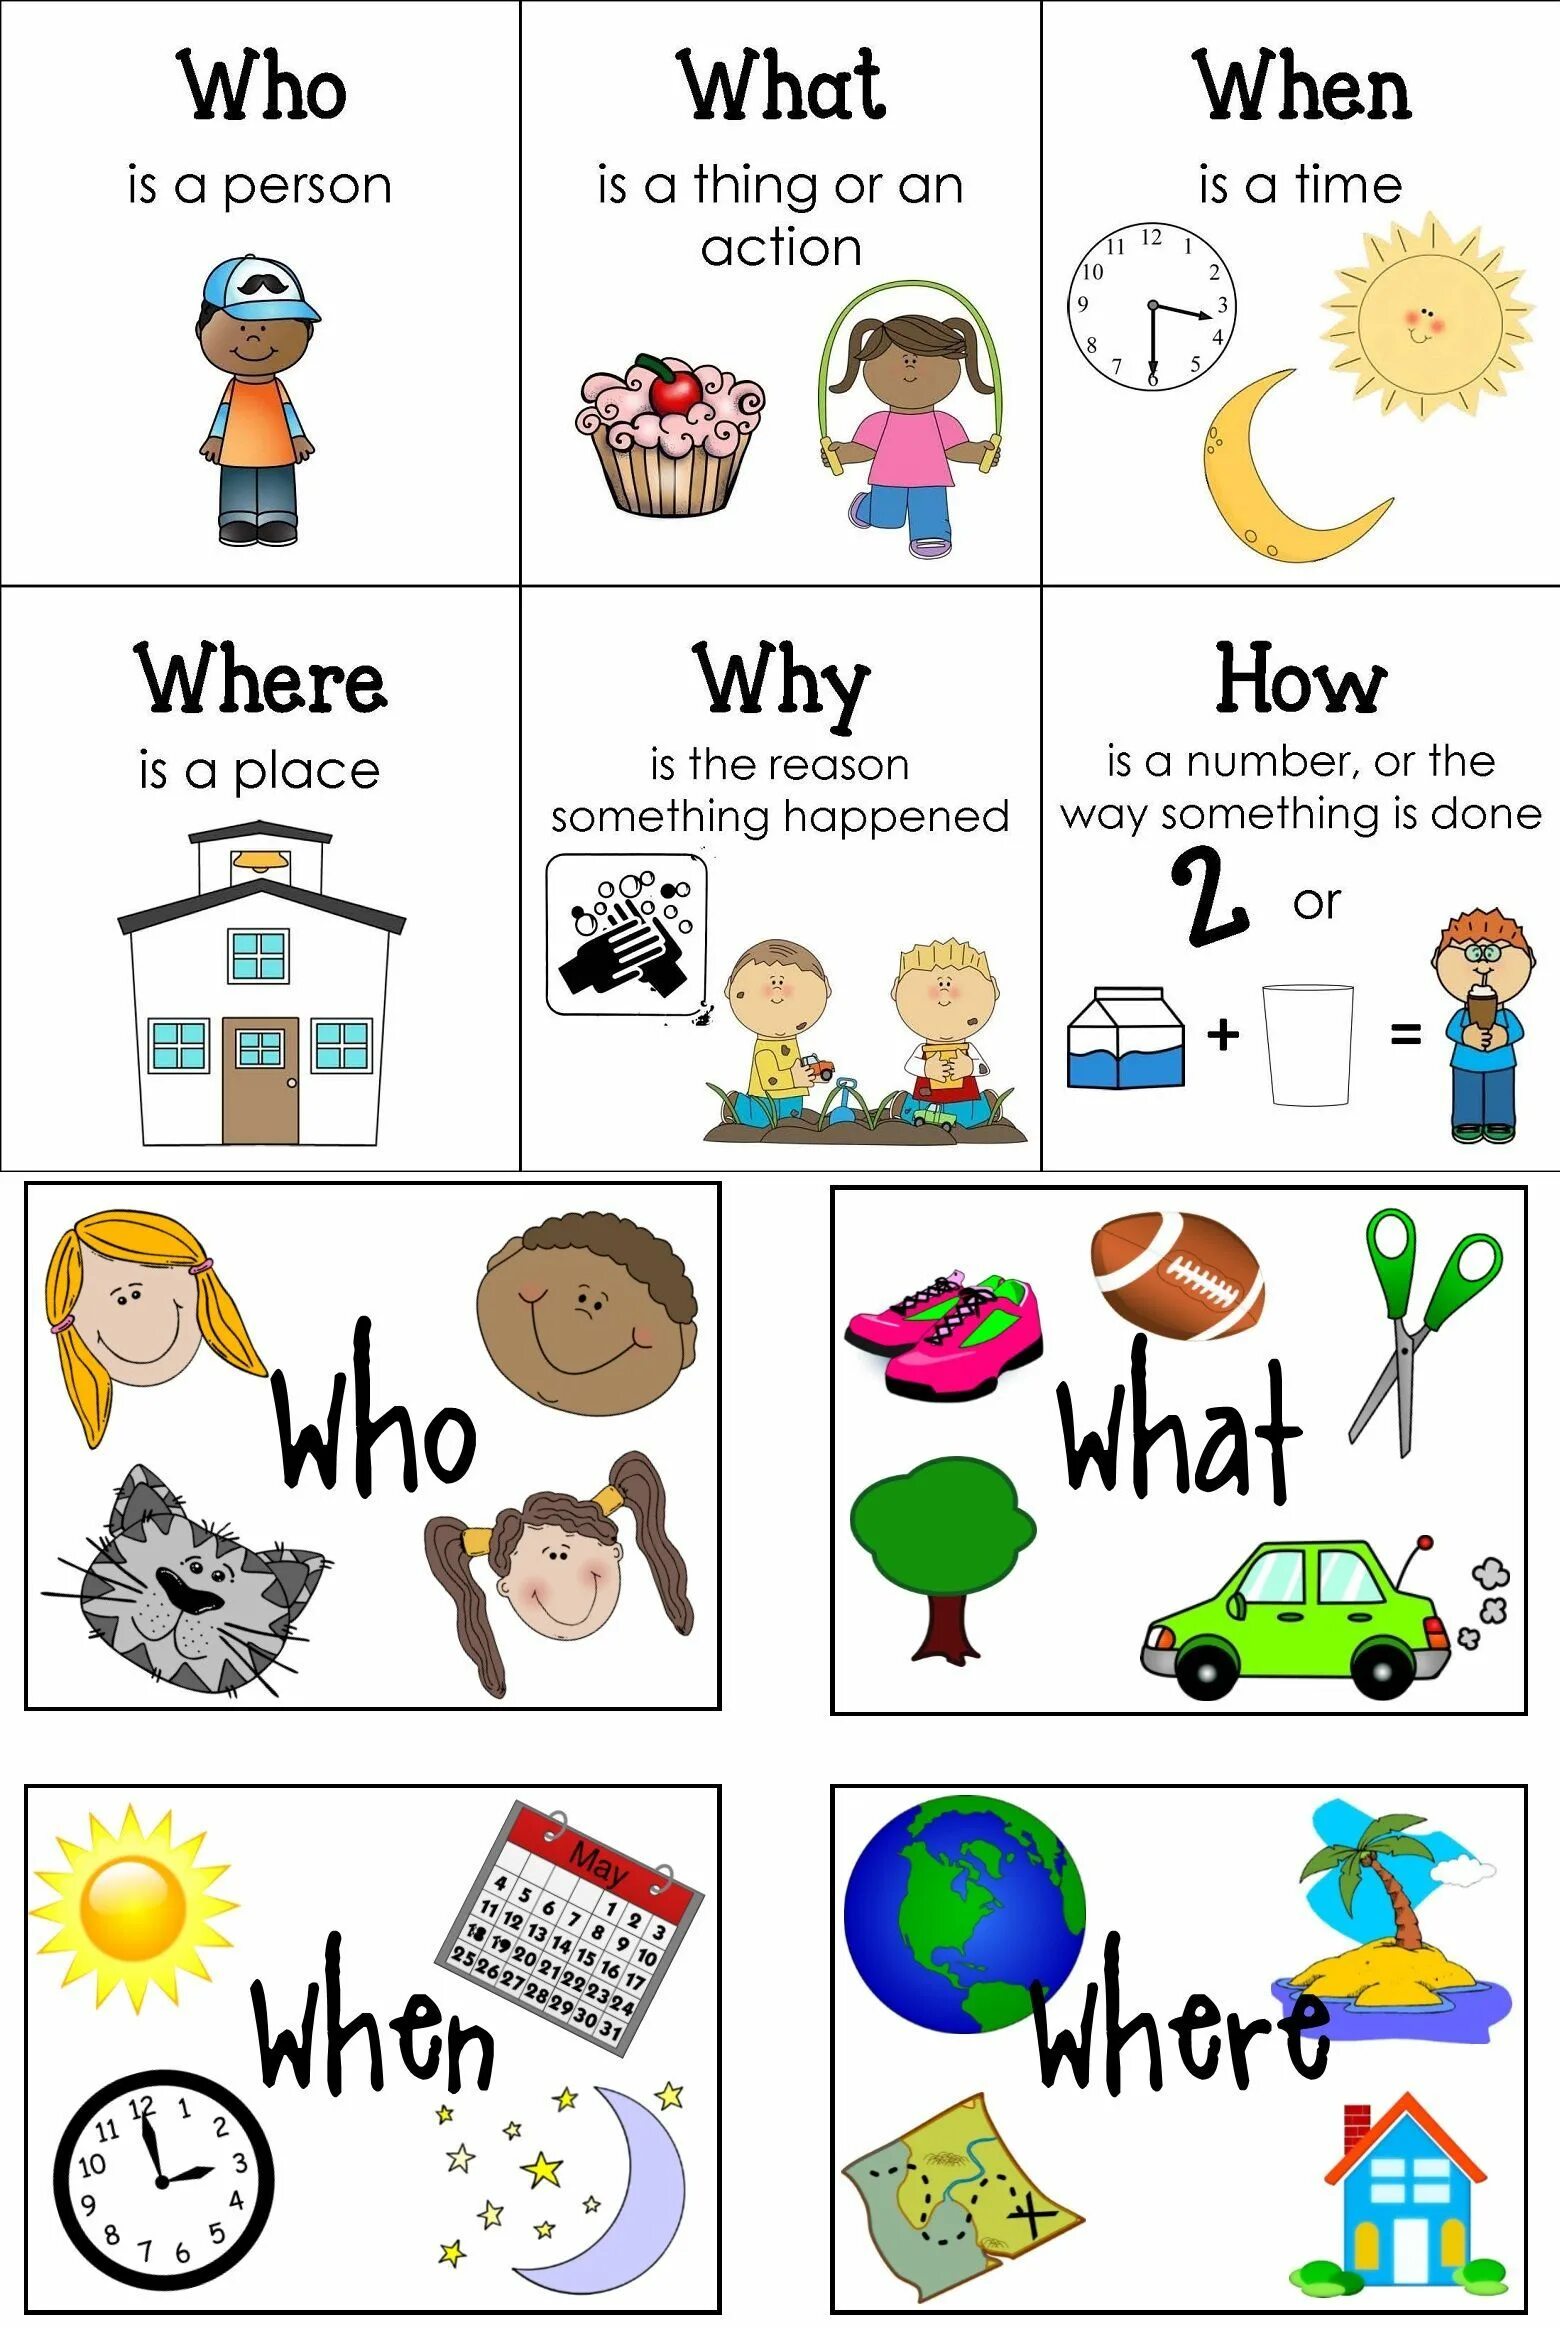 Who is who ответы на вопросы. WH questions для детей. What where how для детей. WH questions for Kids. WH questions упражнения.